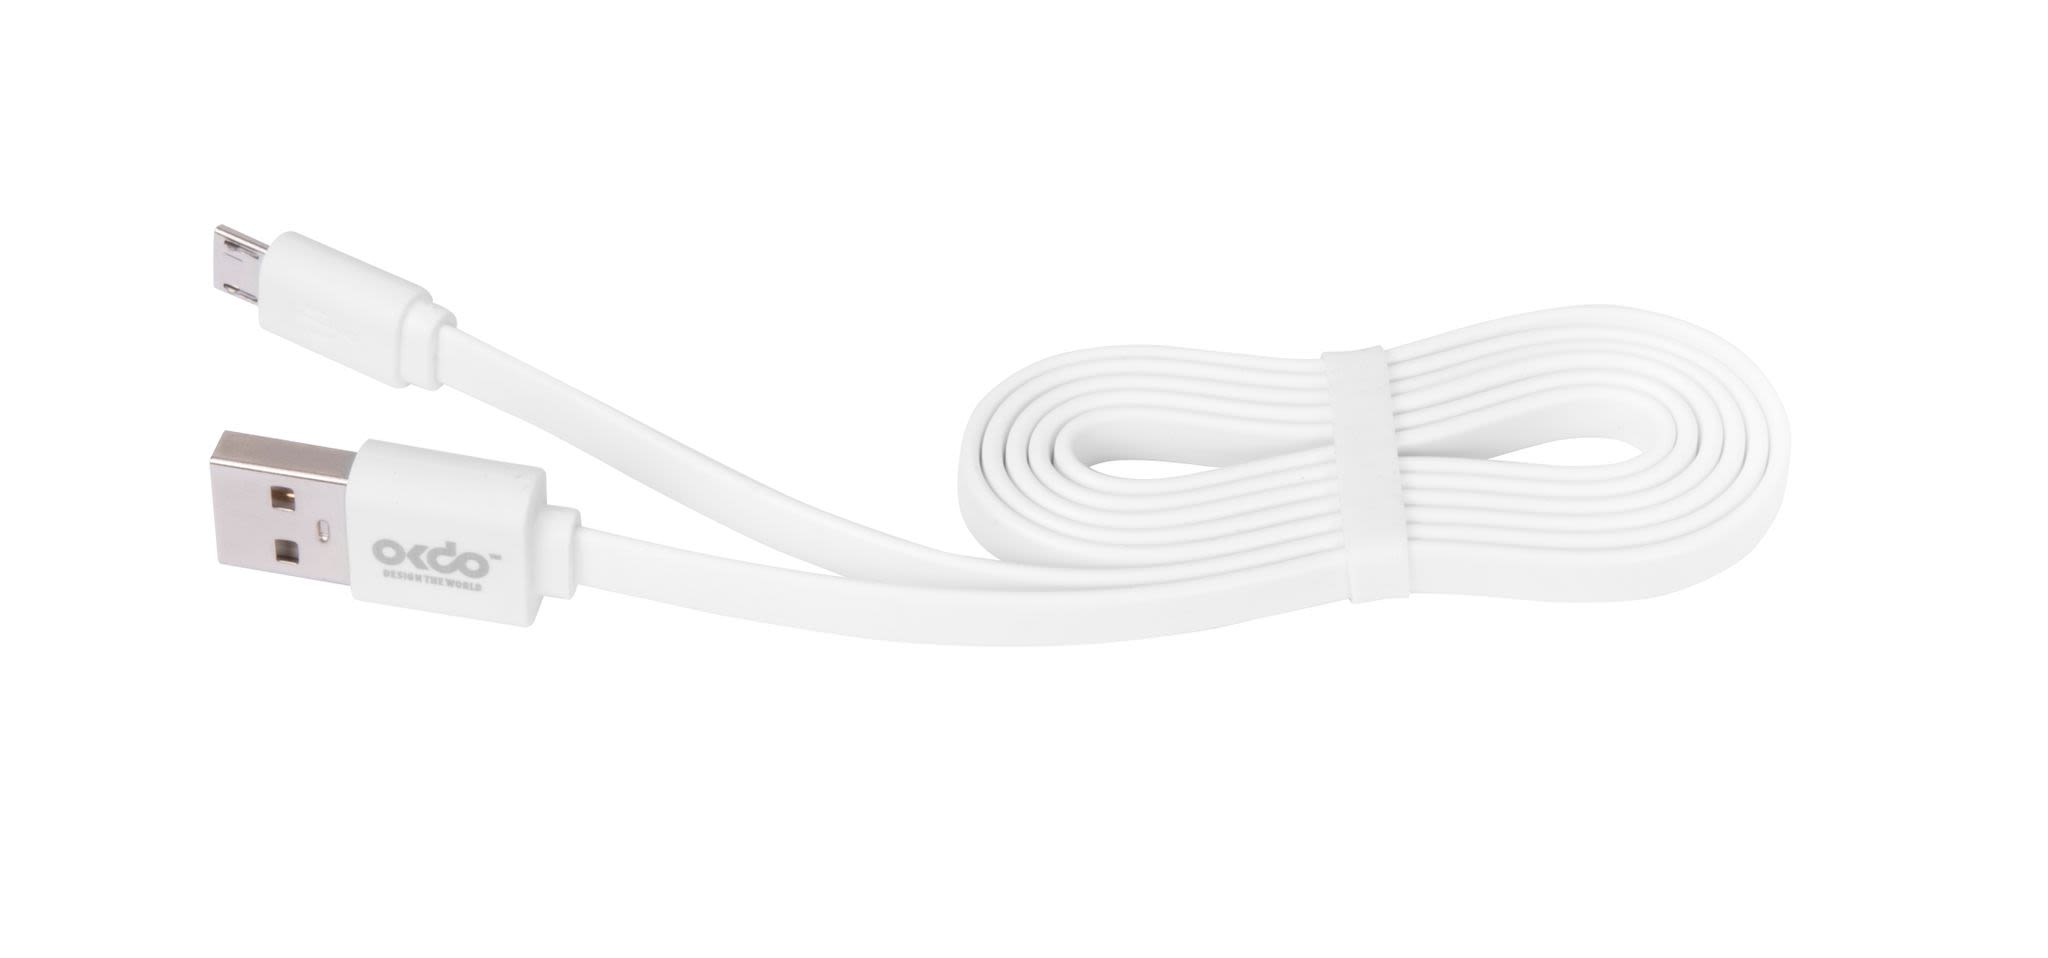 OKdo Micro USB Noodle Cable - 1m White